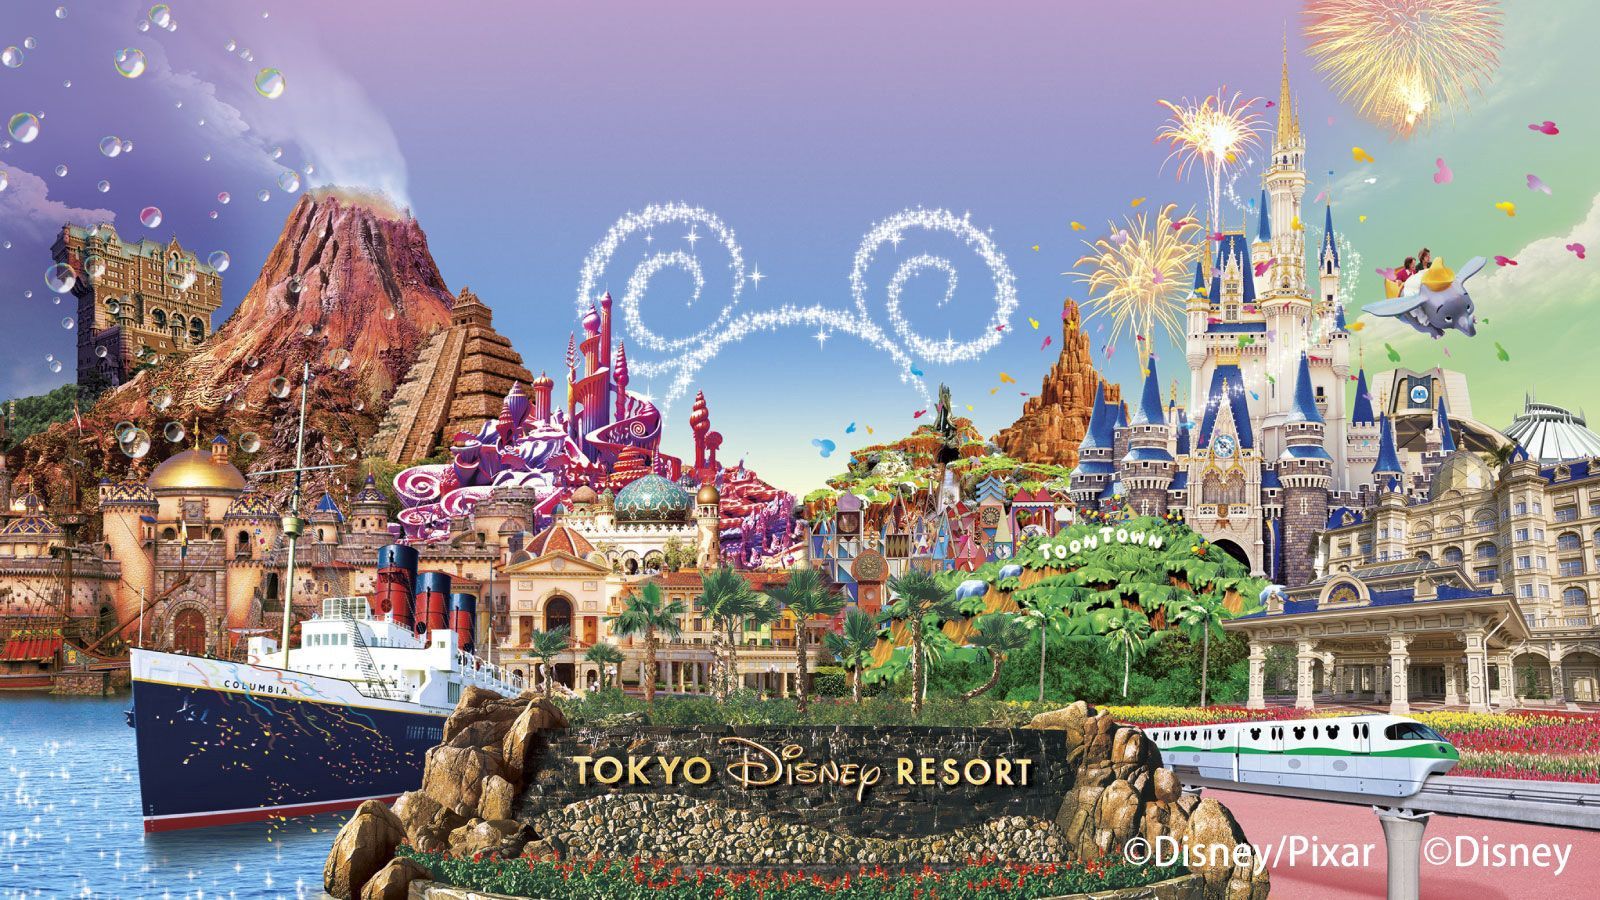 Where To Stay Near Tokyo Disneyland And Disneysea 2019 - Tokyo Disneyland , HD Wallpaper & Backgrounds